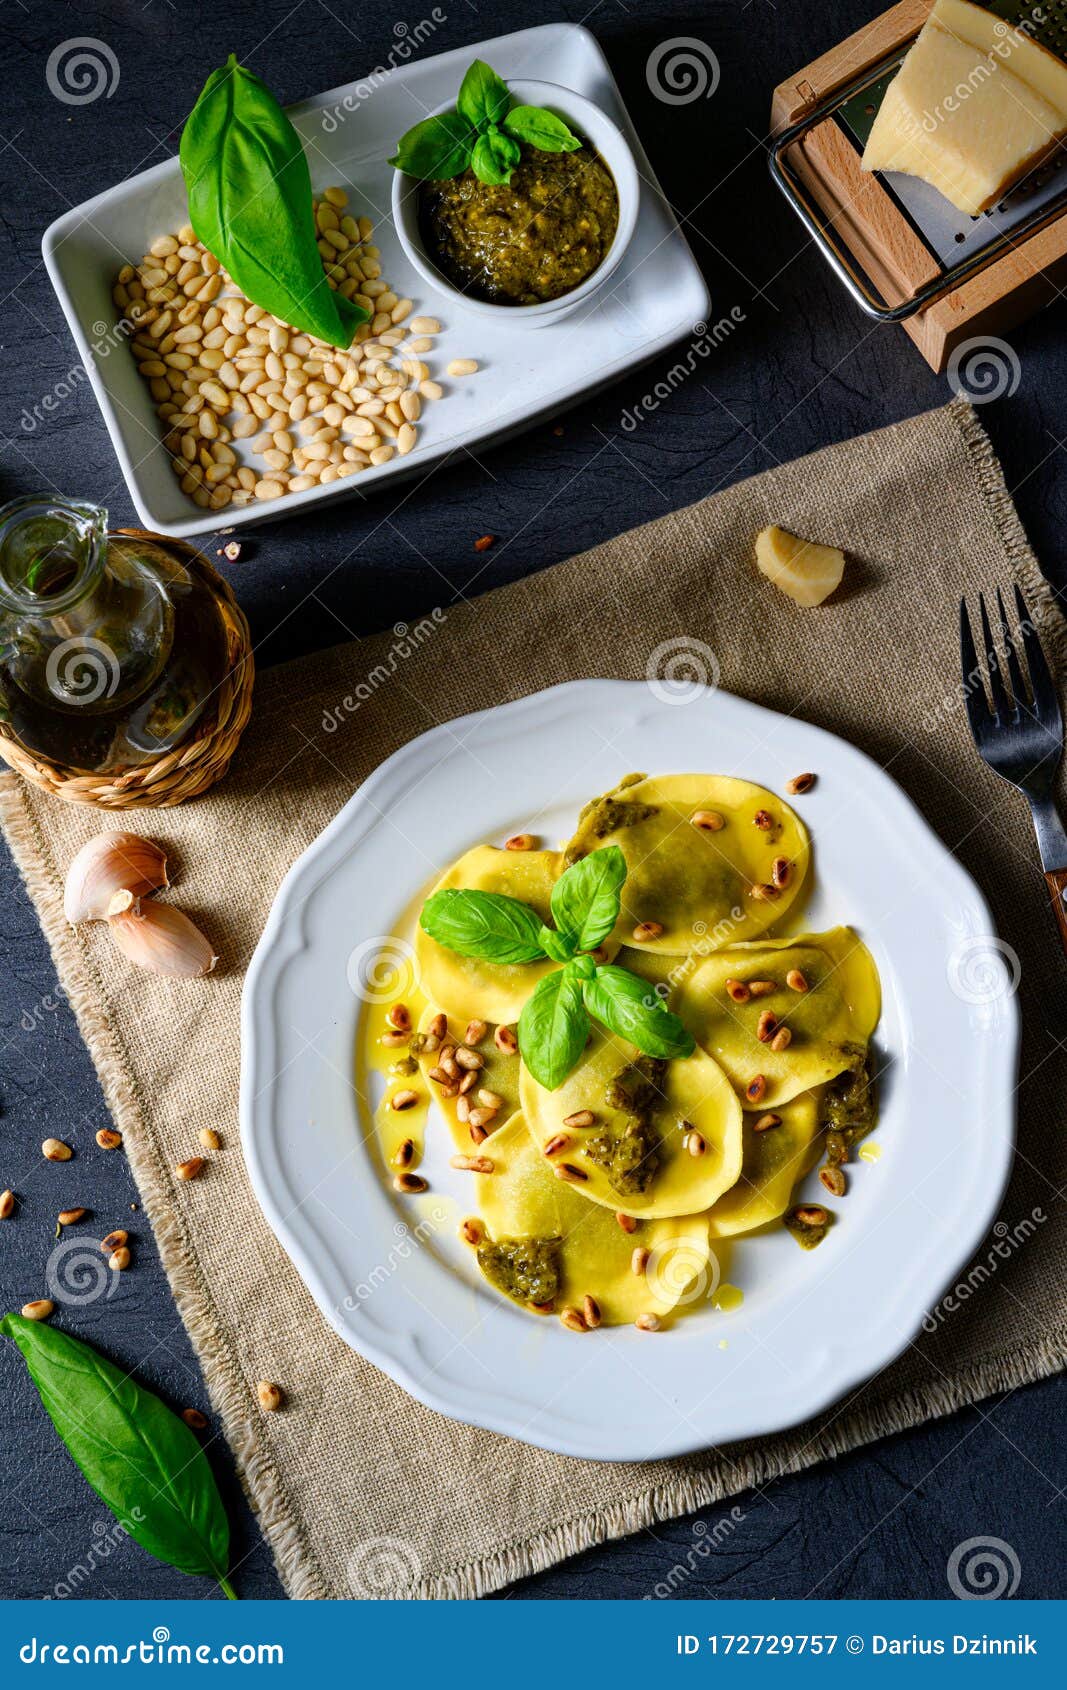 vegetariano italiano! tortelli with roasted pine nuts and pesto basilico